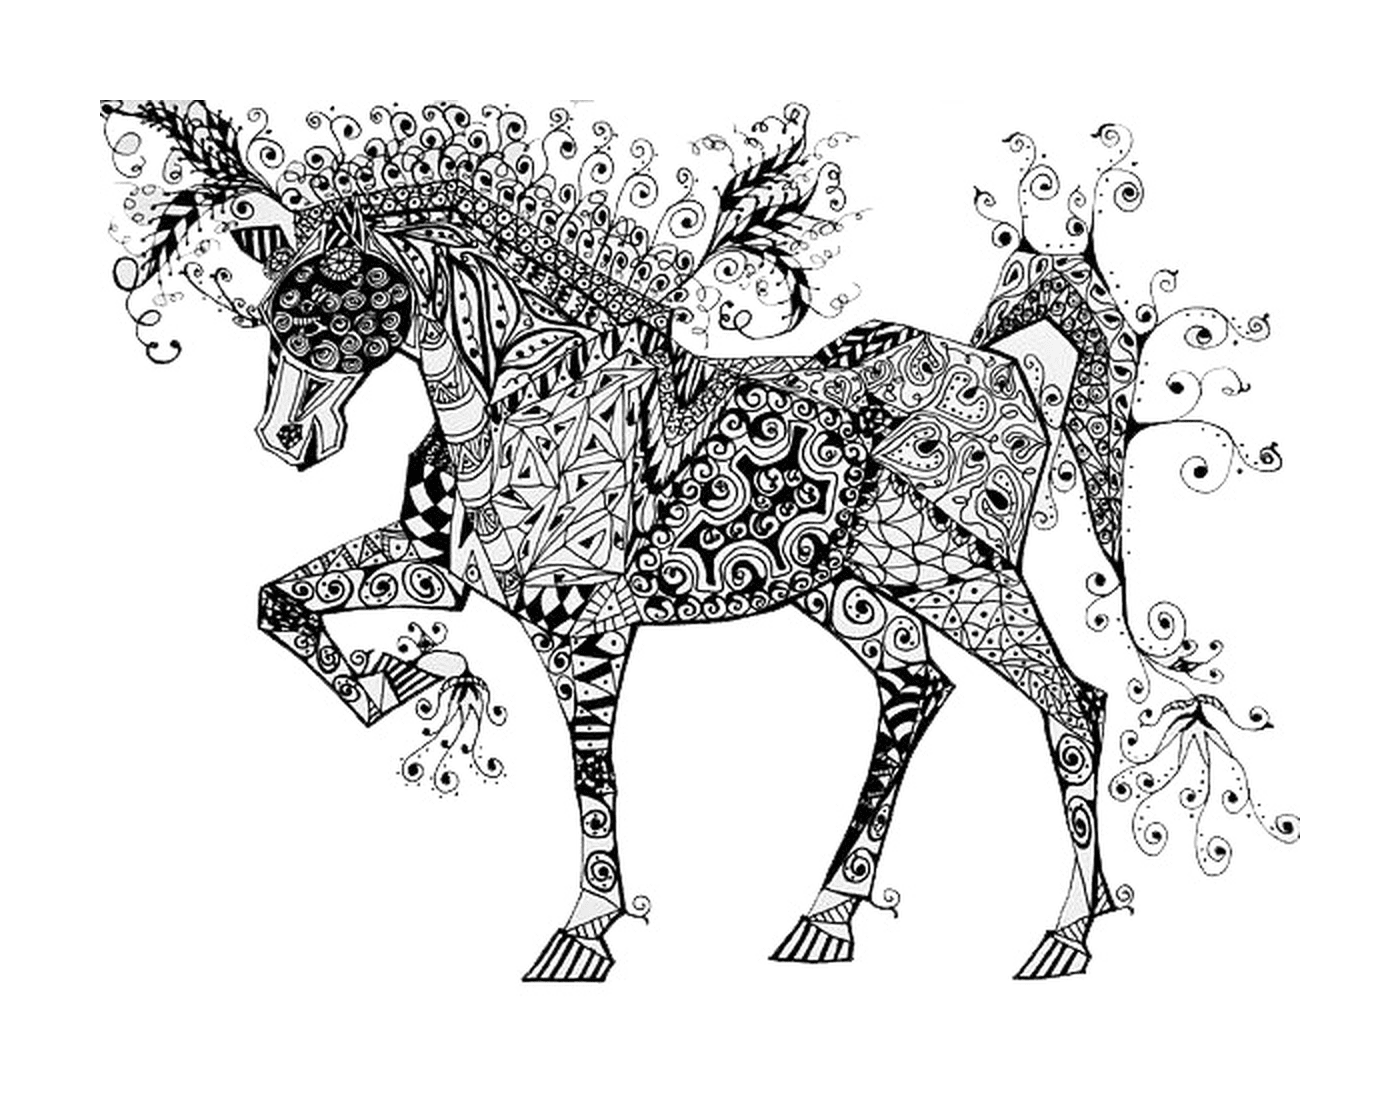  Cavallo da circo con motivi zentangoli 